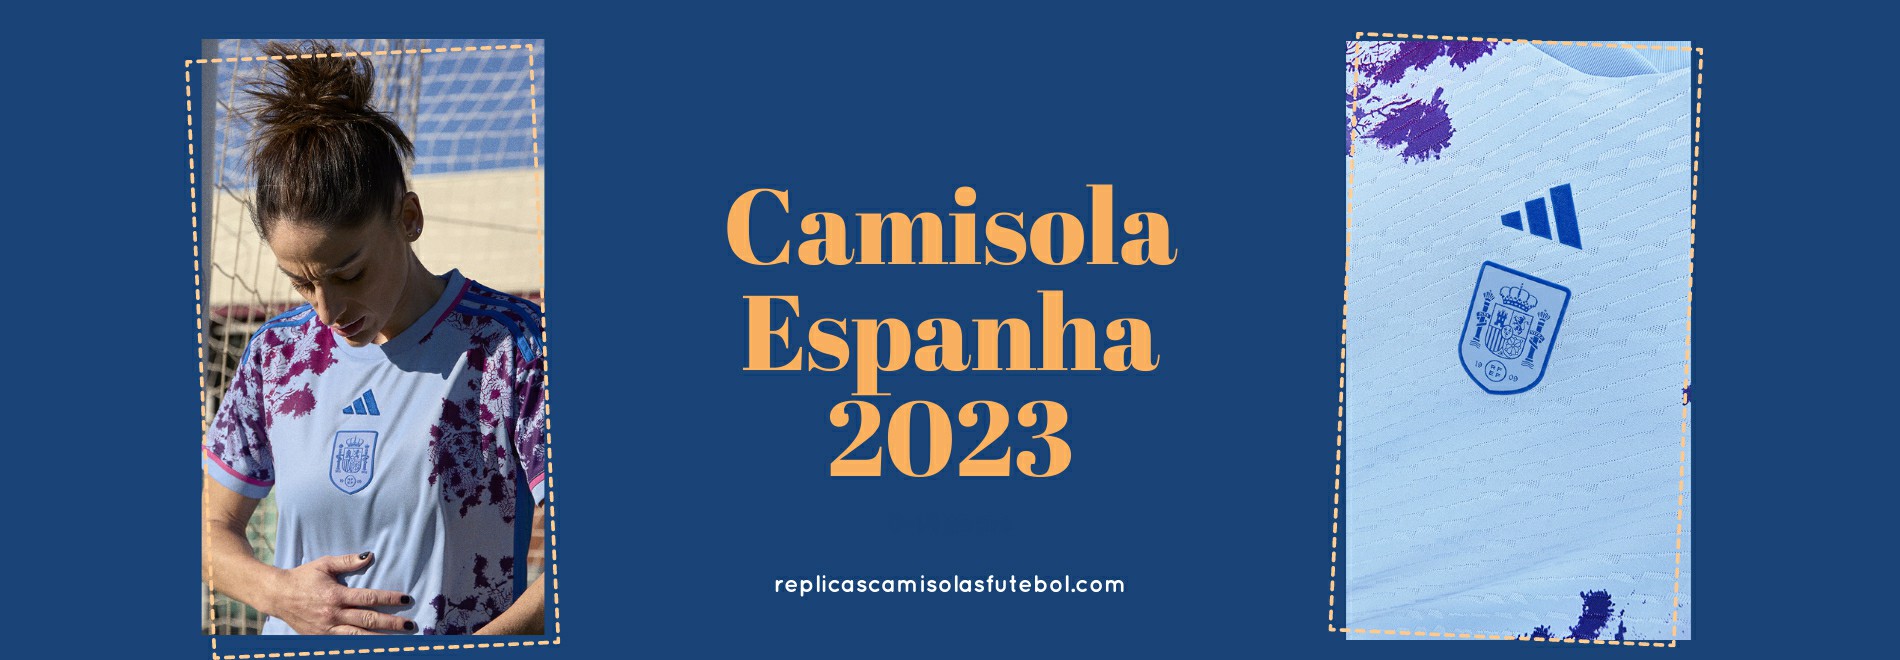 Camisola Espanha 2023-2024